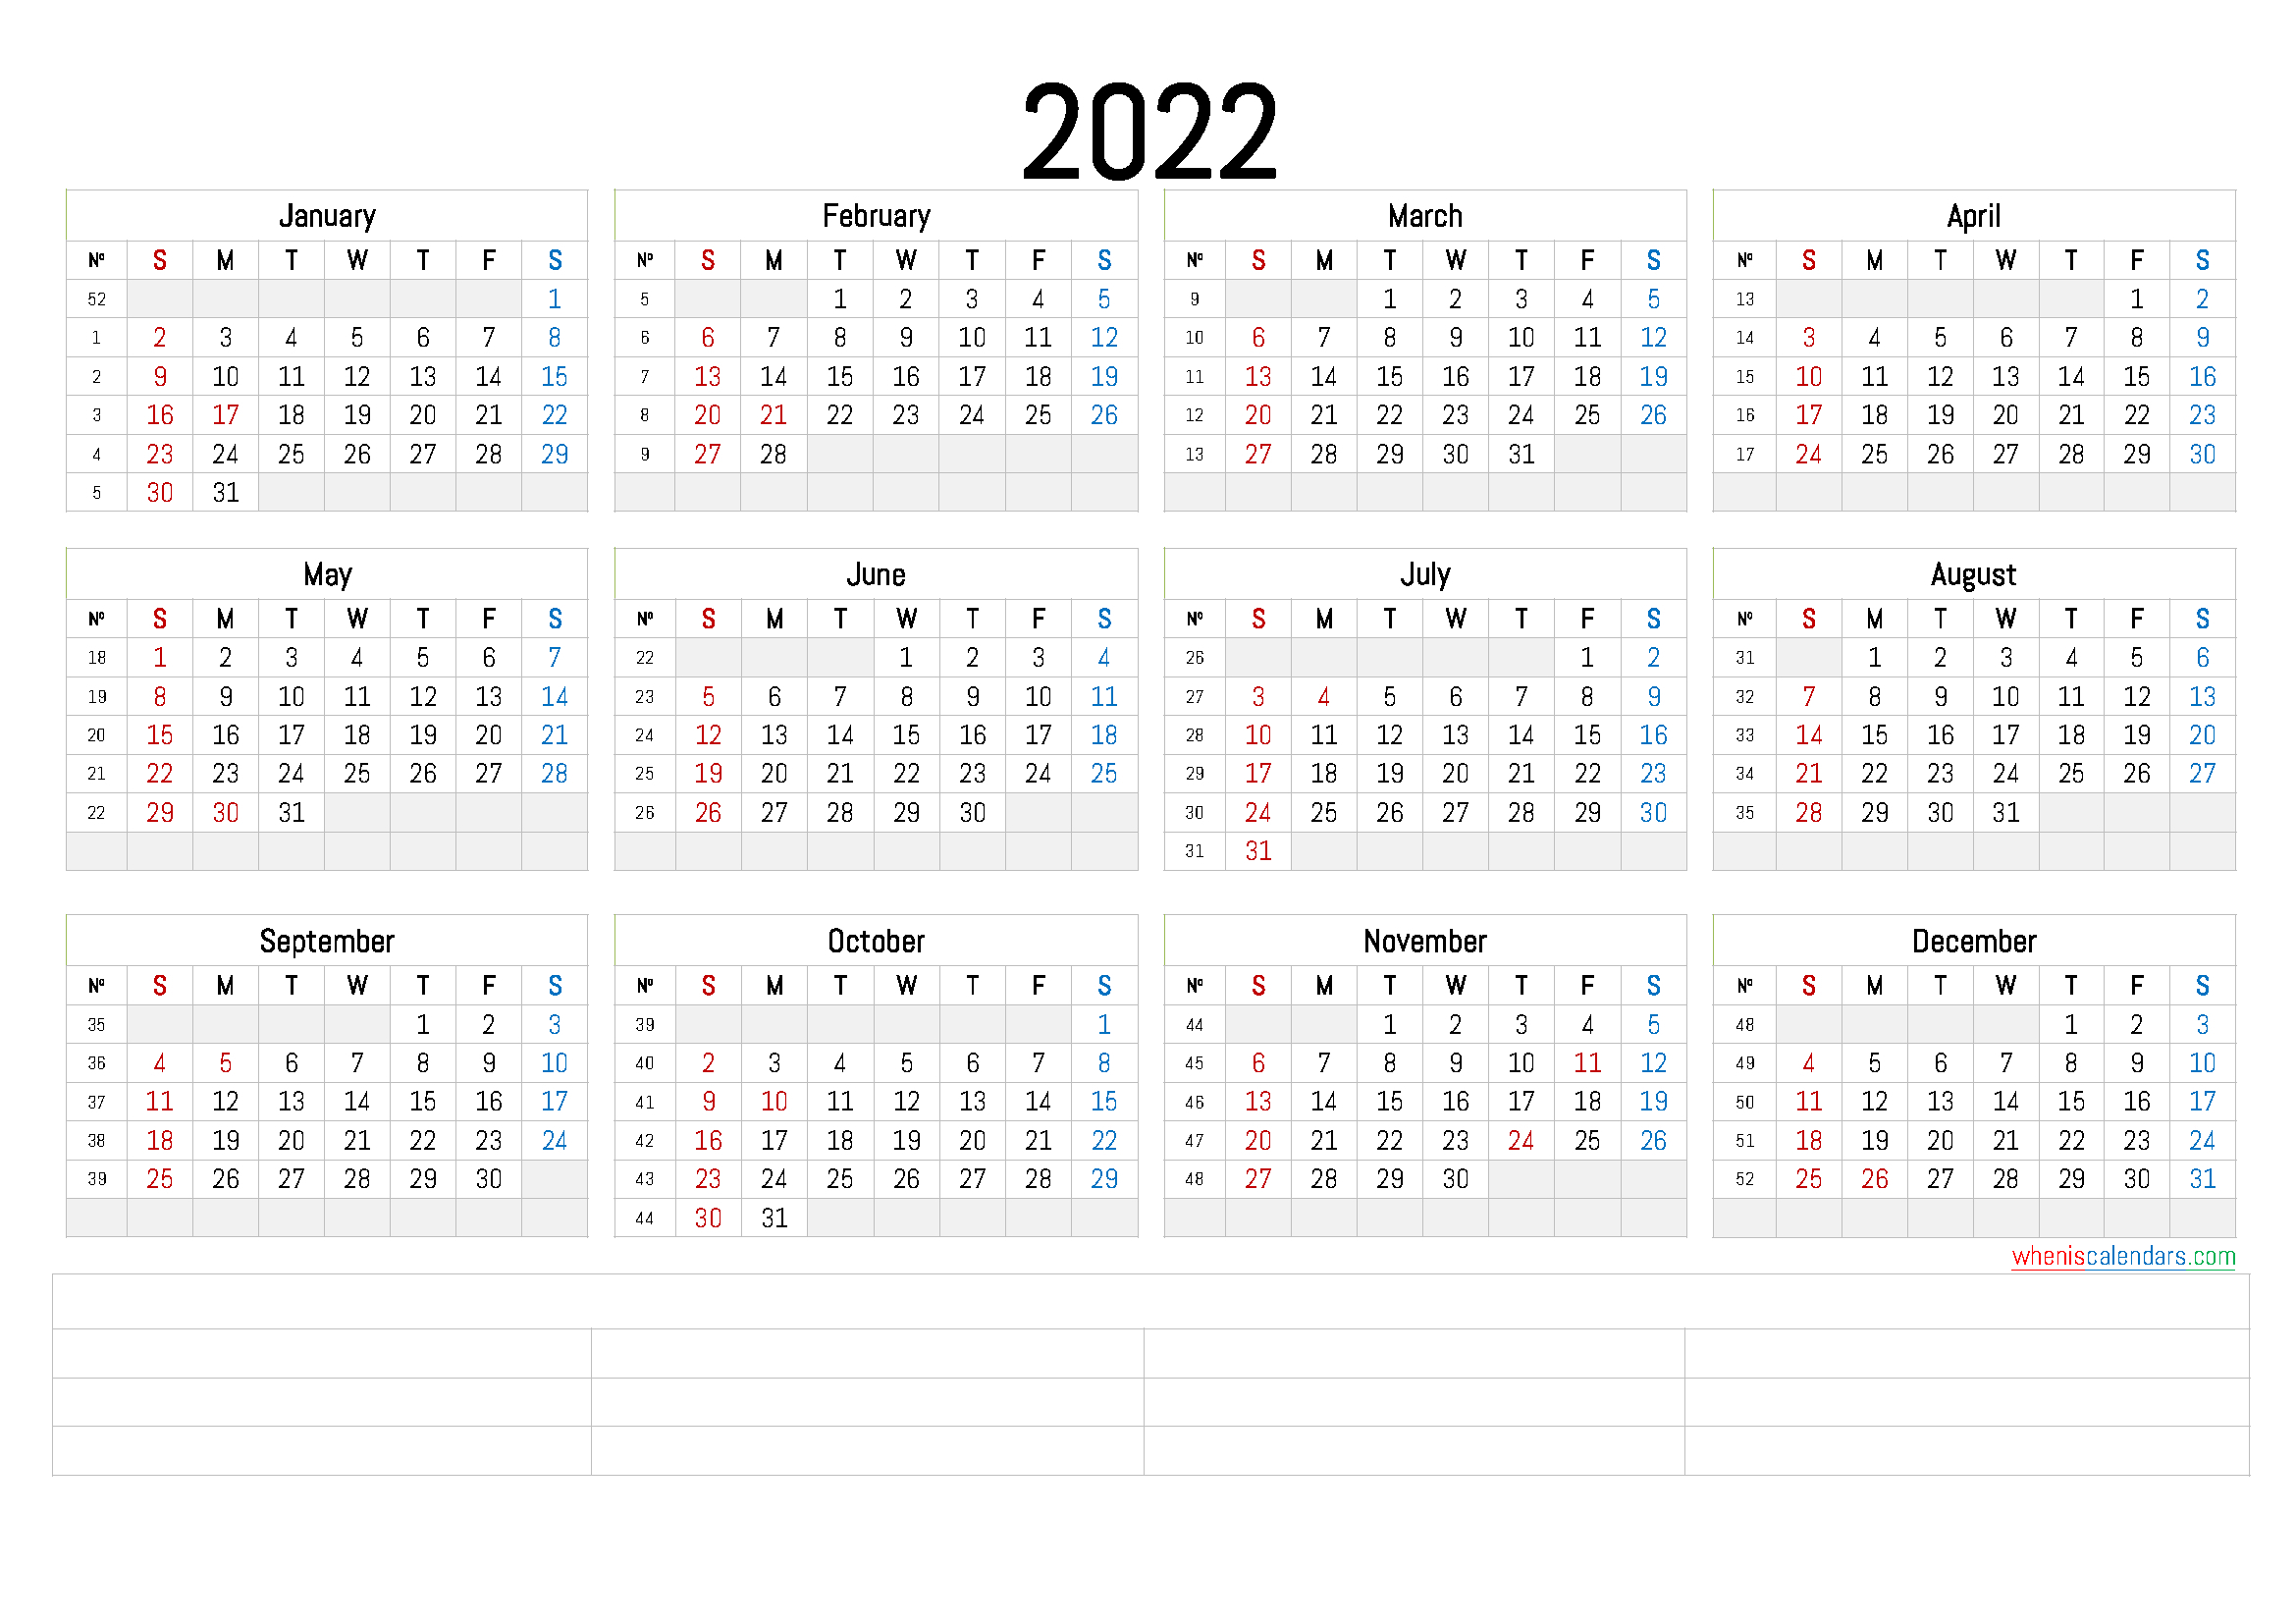 Printable Calendar 2022 : Yearly Printable Calendar 2022 With Holidays inside 2022 Wall Calendar Printable Free